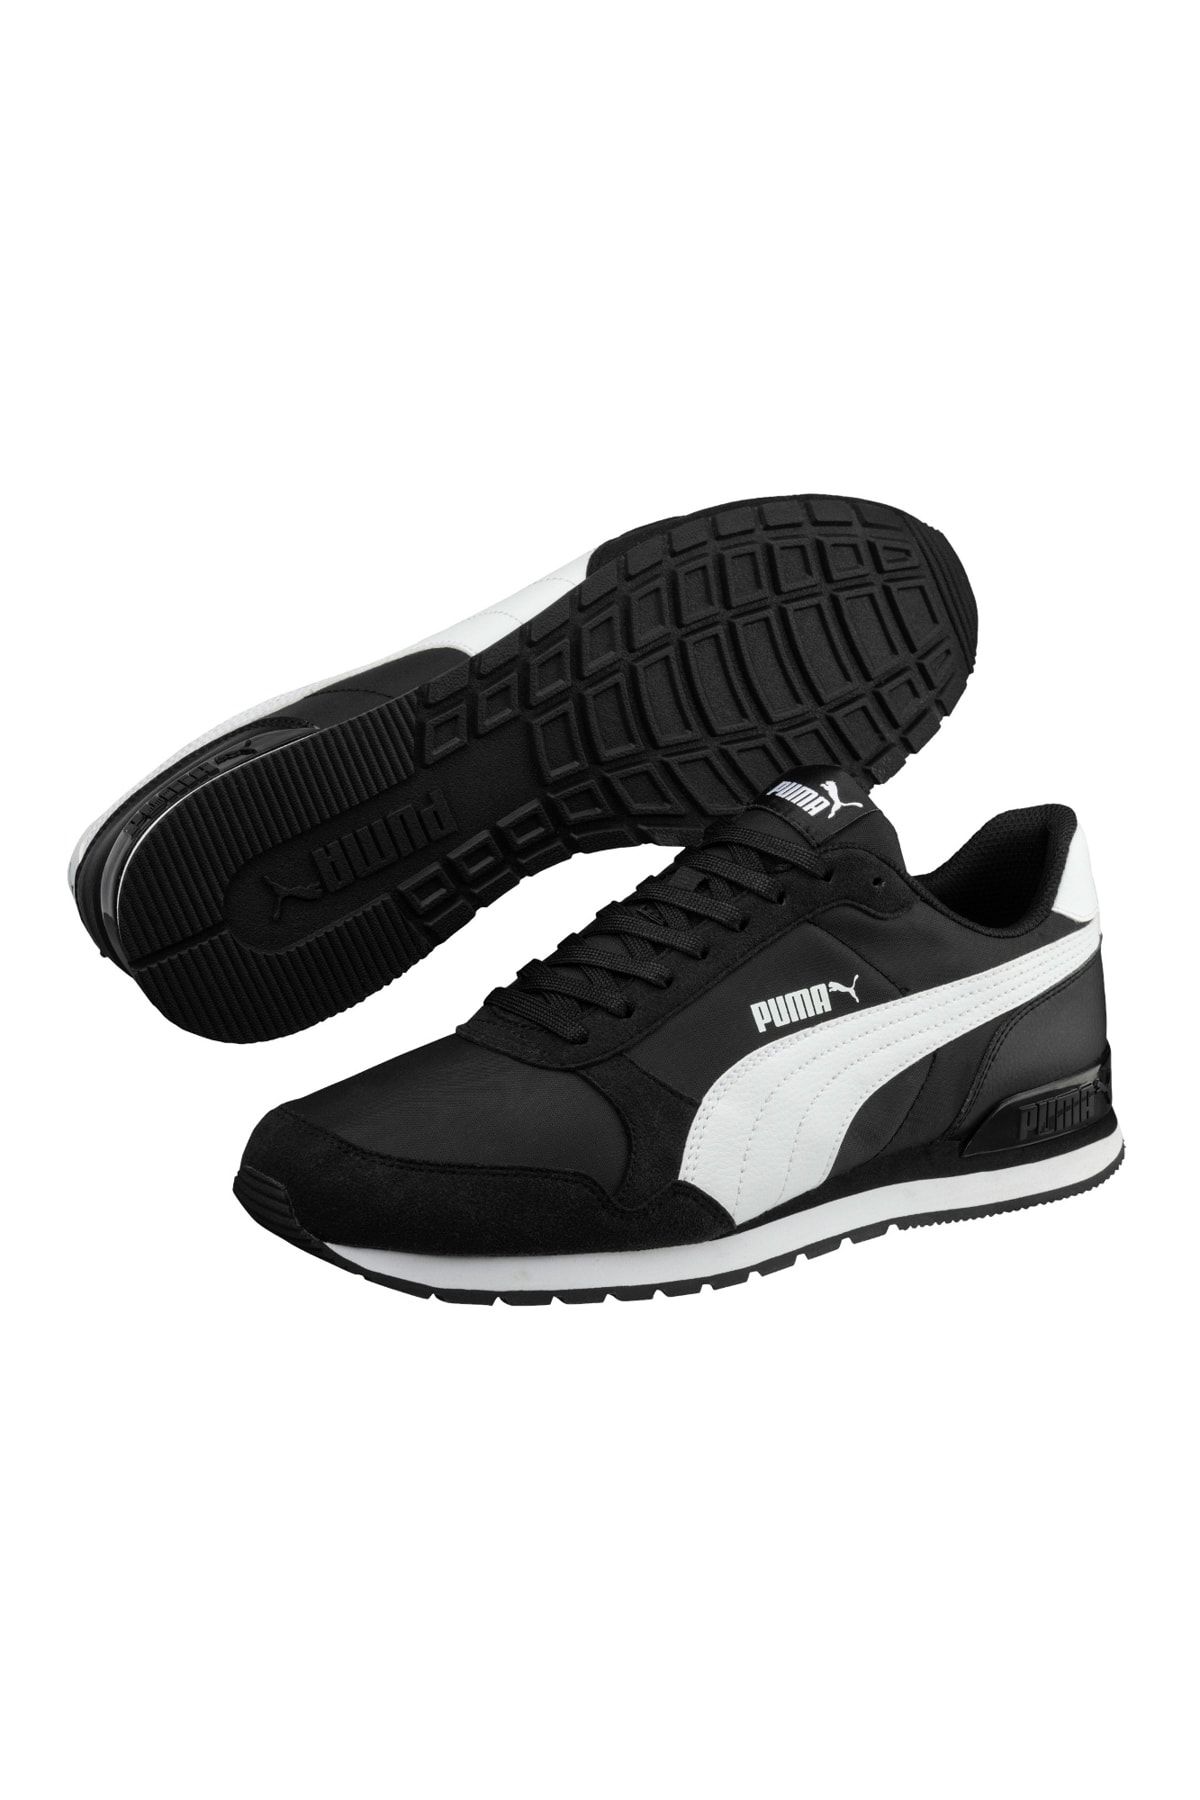 Puma ST RUNNER V2 NL Siyah Erkek Sneaker Ayakkabı 100480281